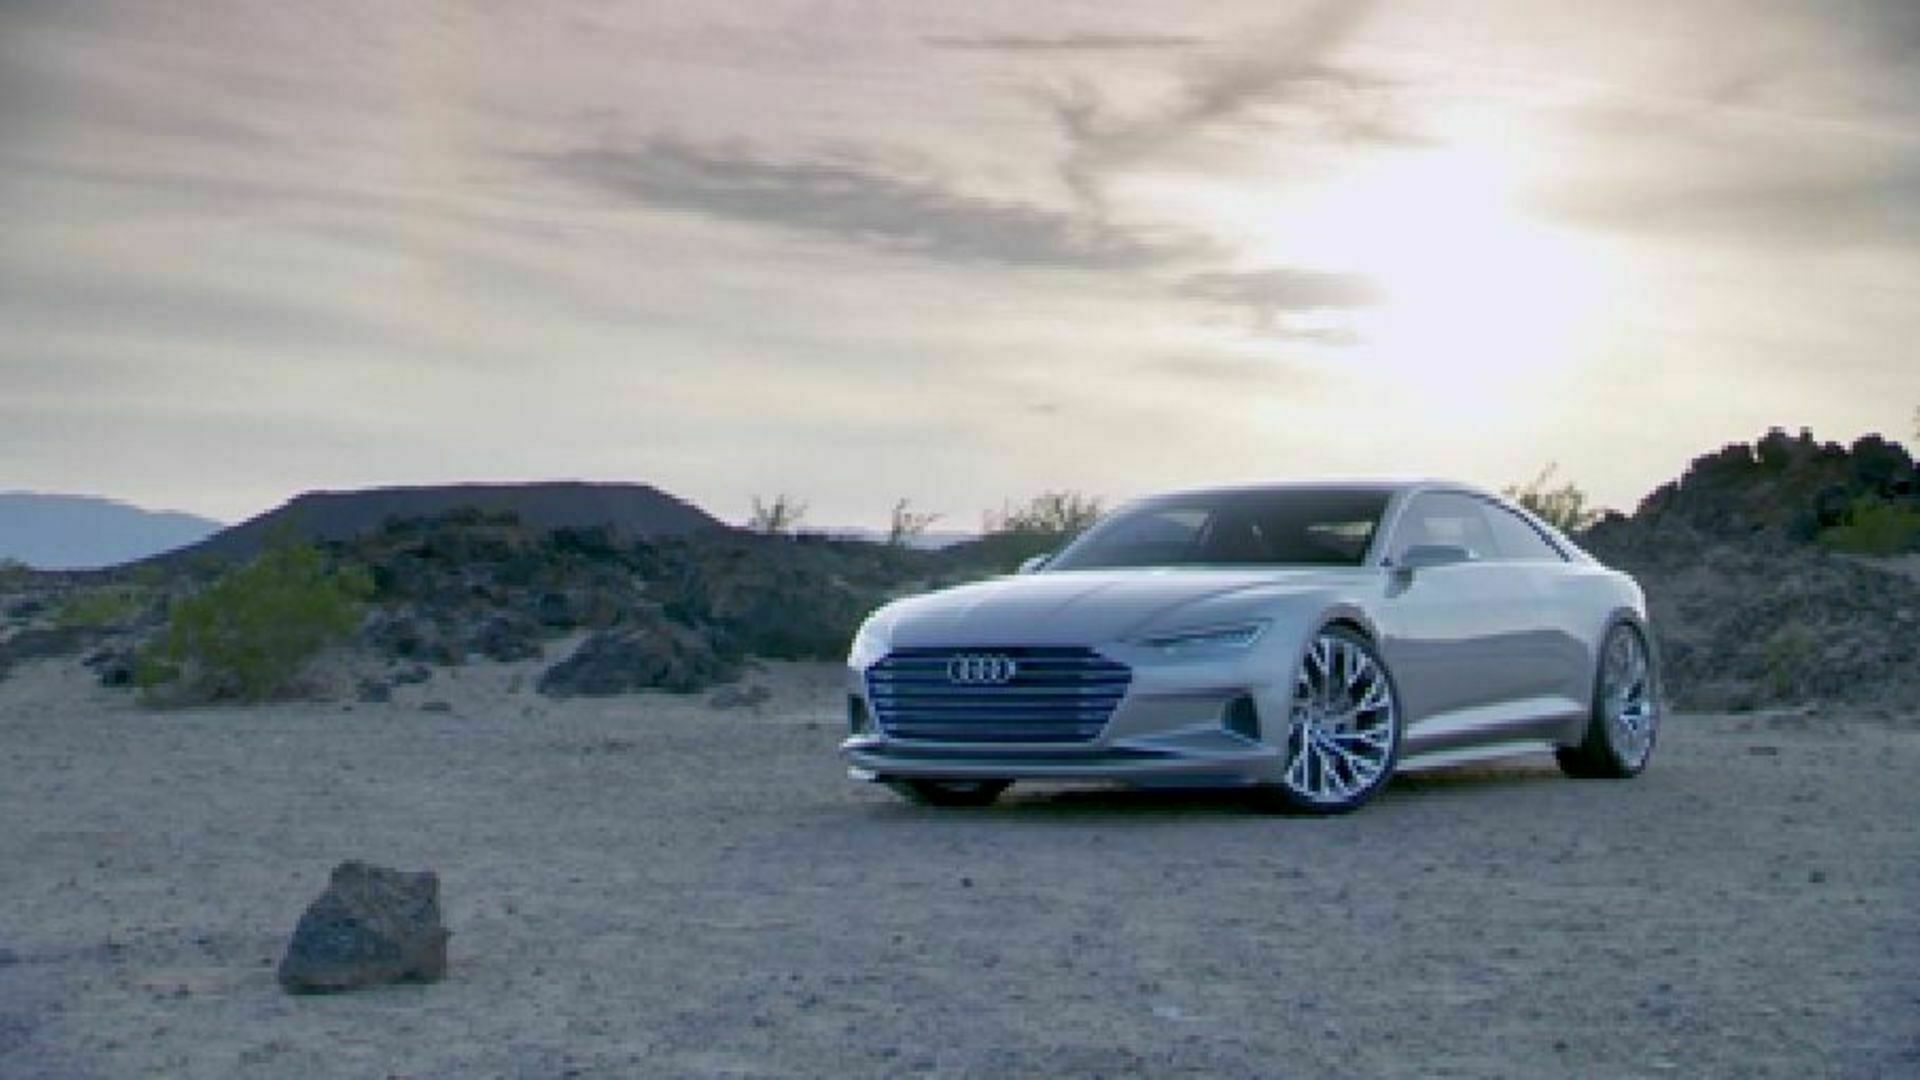 Das Audi Showcar der Los Angeles Auto Show